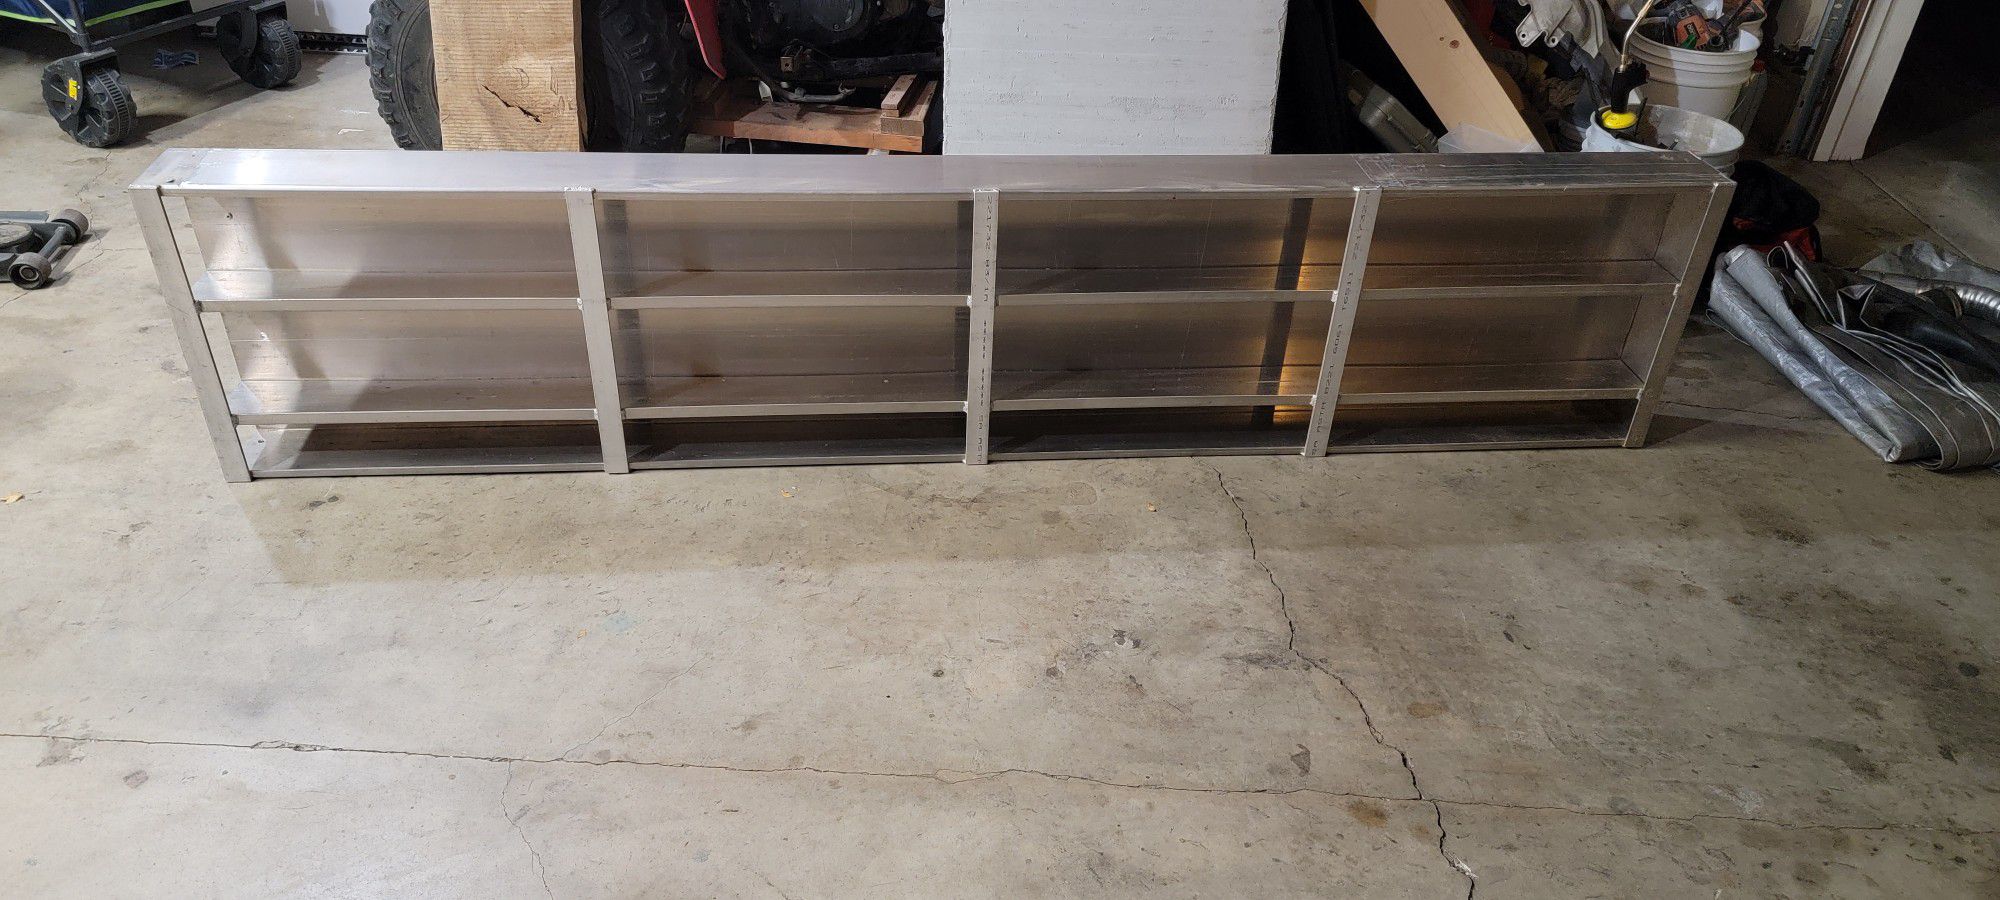 Stainless Steel Shelf For The Work Van 